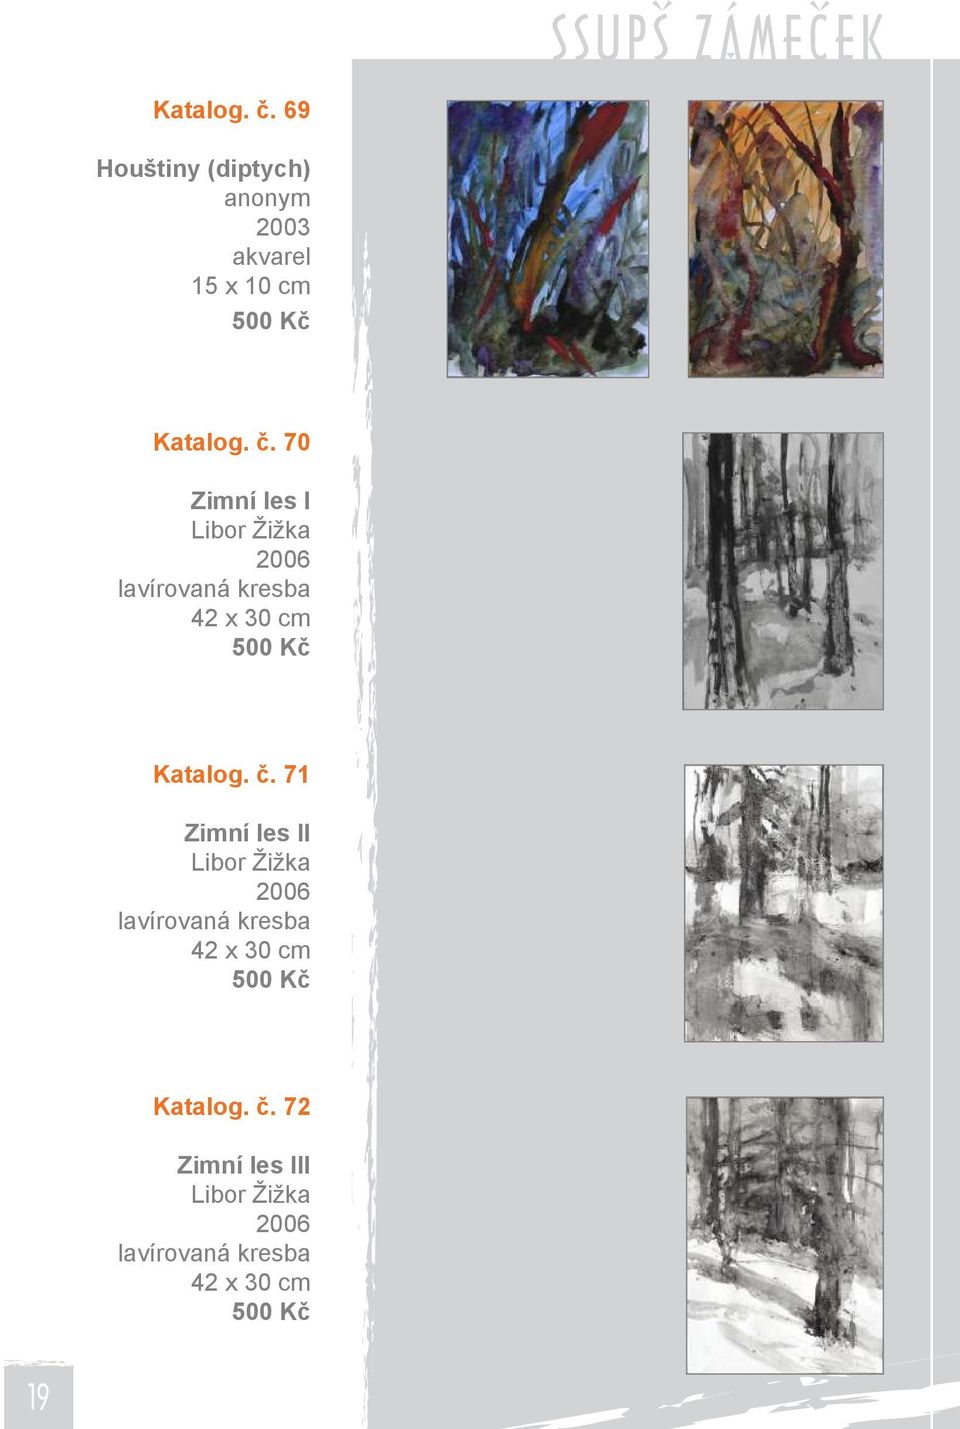 70 Zimní les I Libor Žižka 2006 lavírovaná kresba 42 x 30 cm 500 Kč Katalog. č.